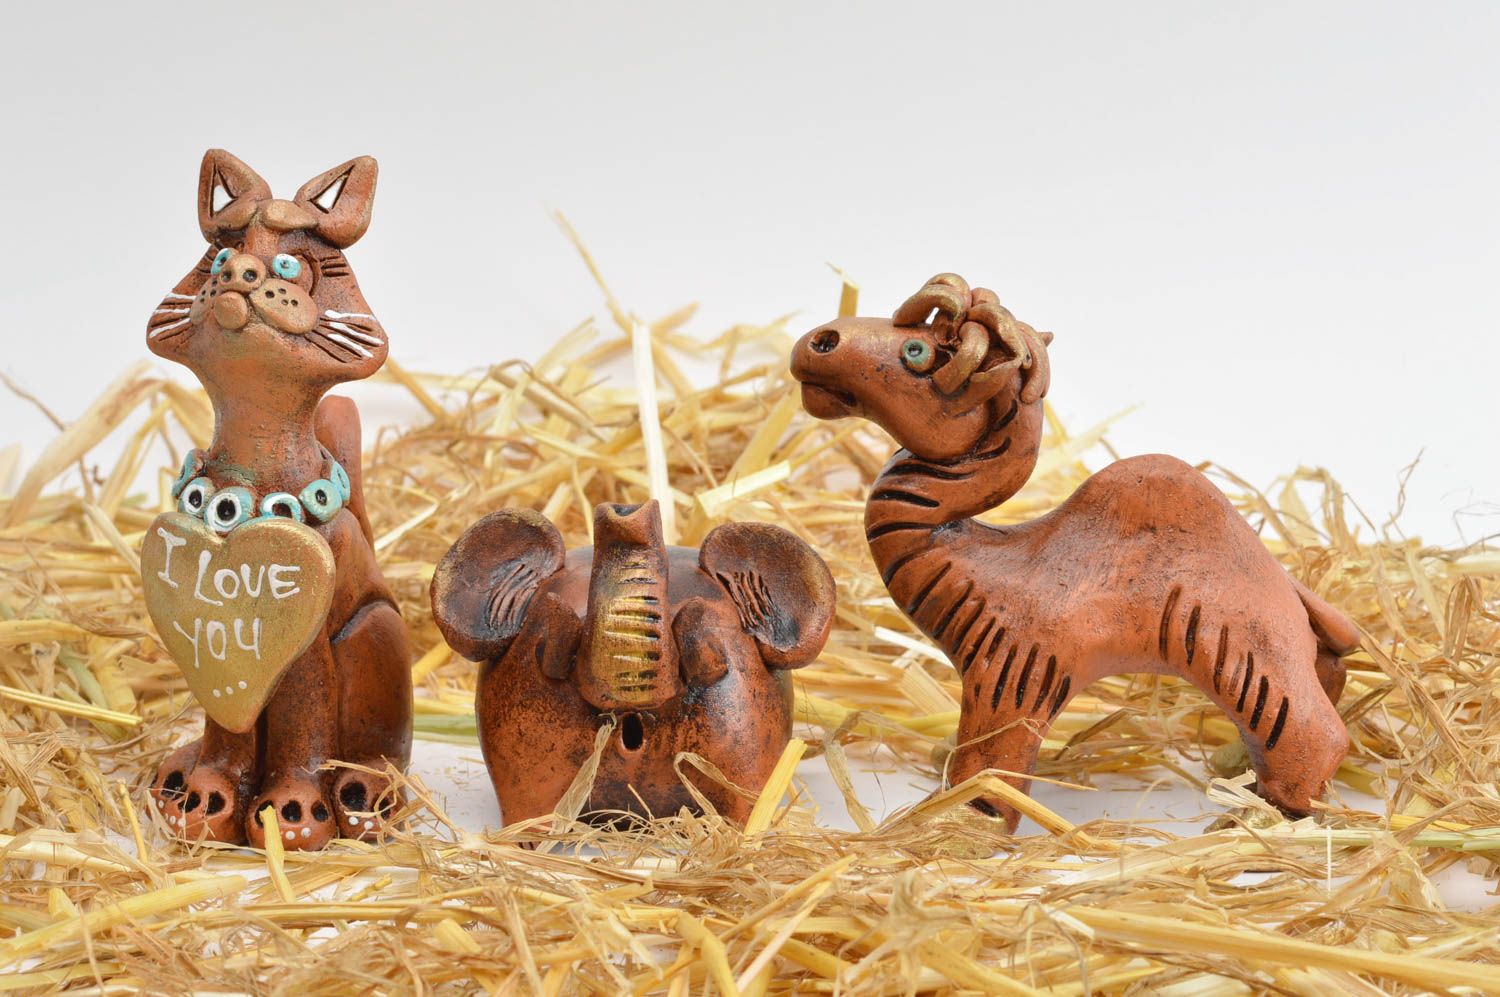 Handmade decorations ceramic figurines animal figurines for decorative use only photo 1